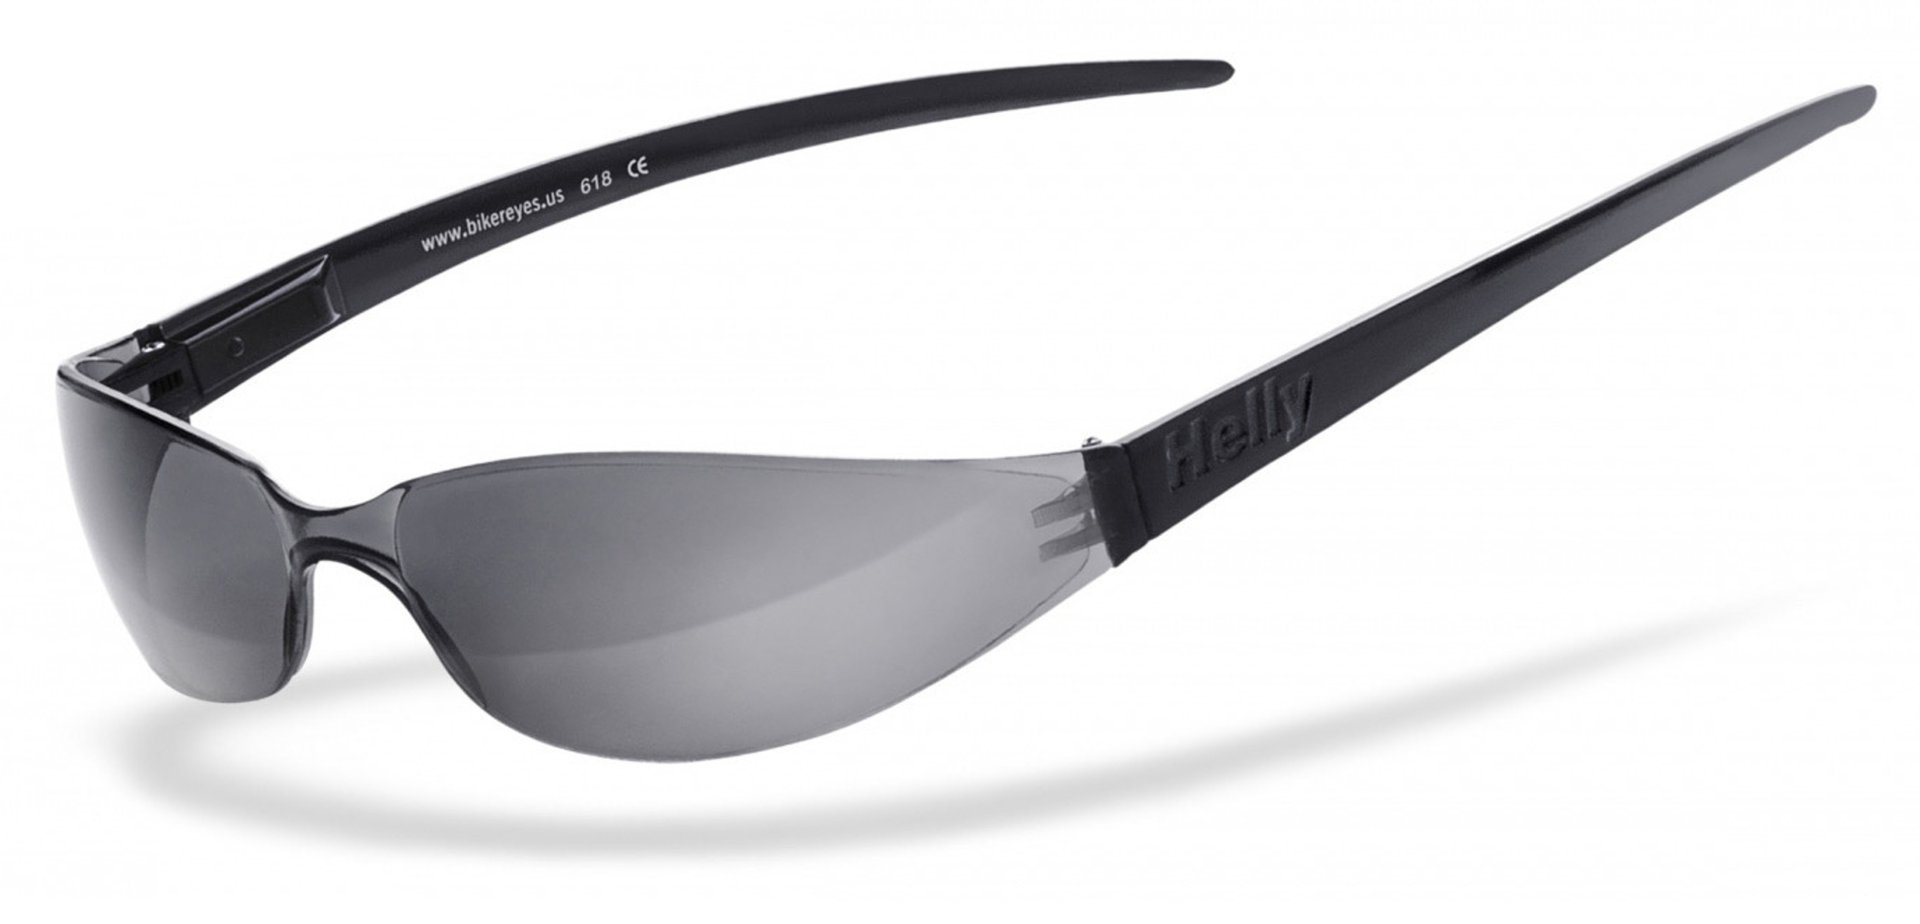 Helly Bikereyes Freeway 3.1 Sunglasses, black, black, Size One Size